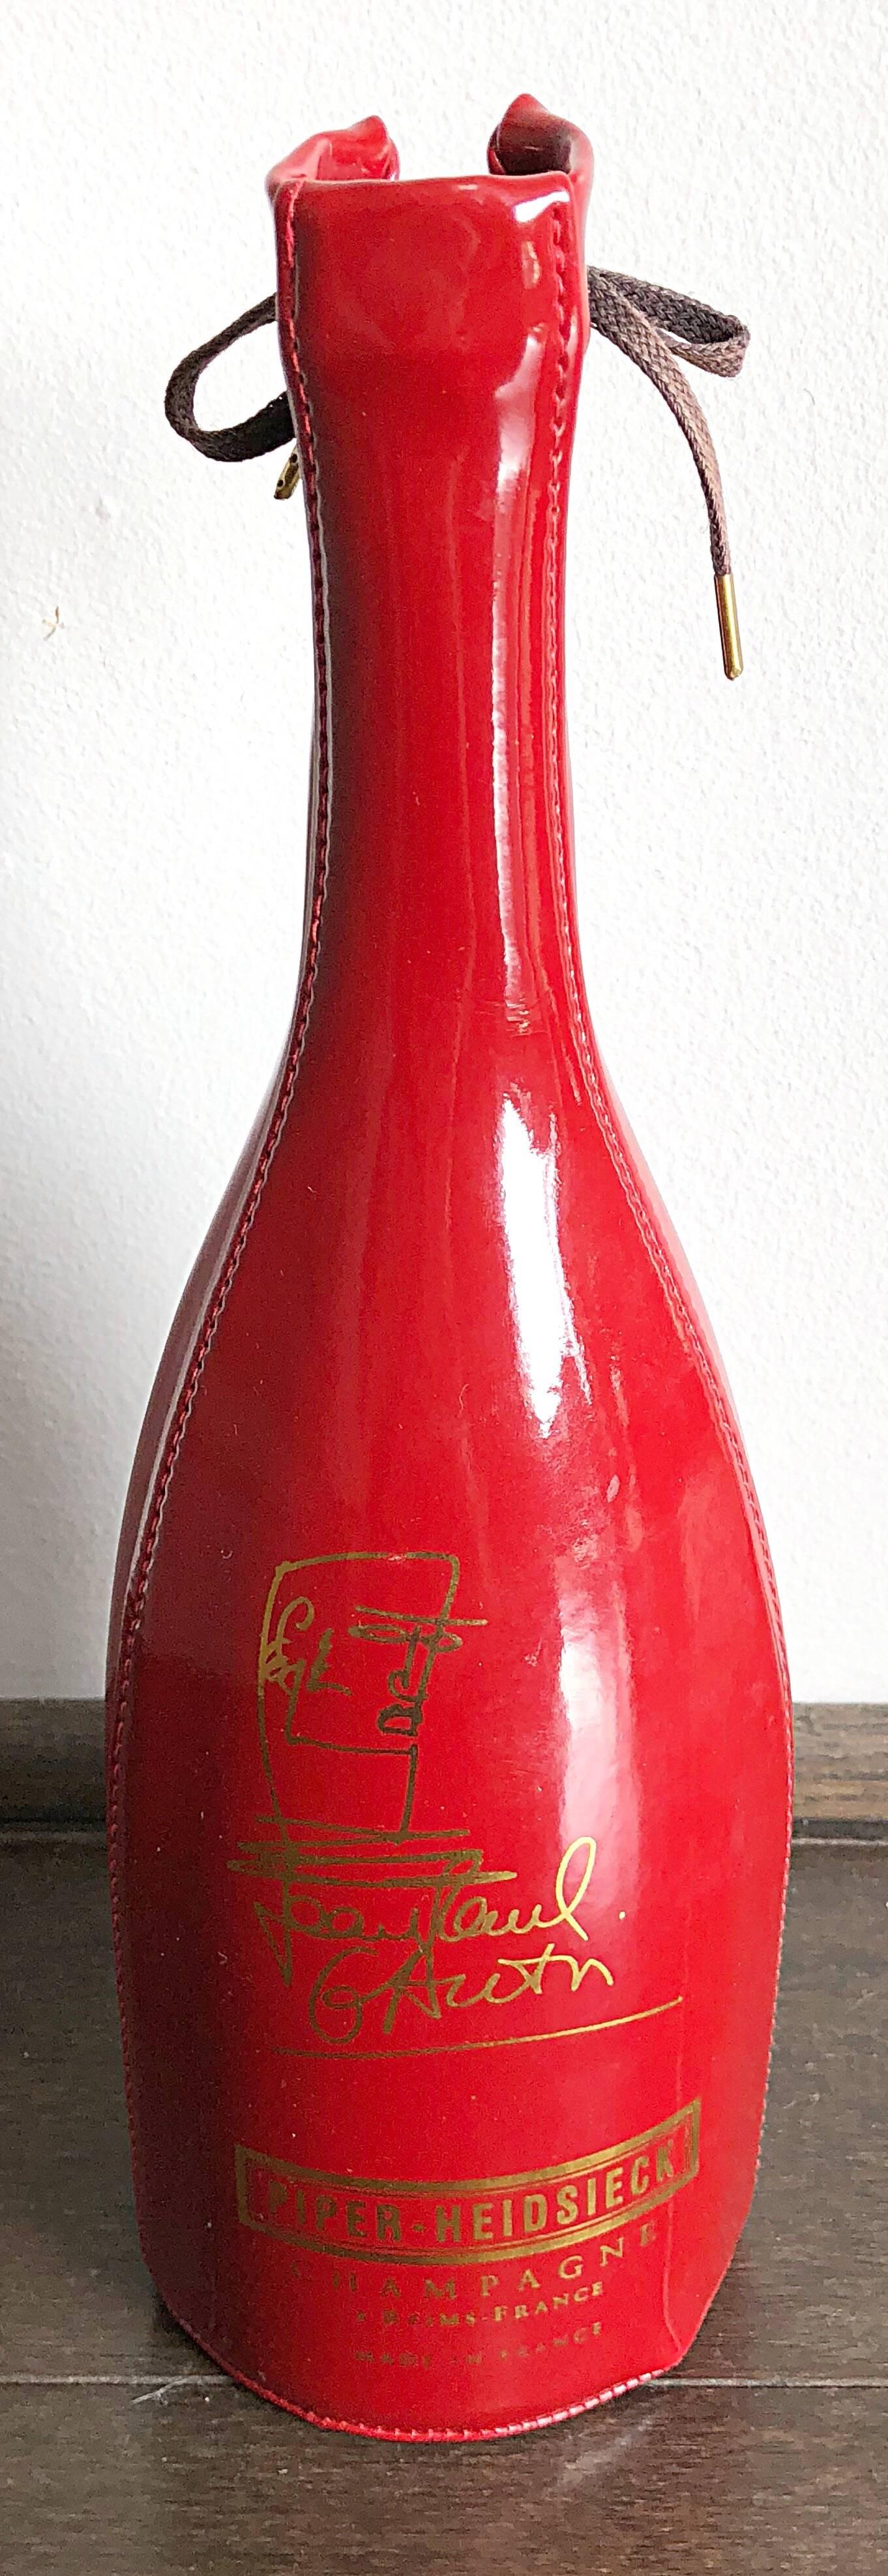 Jean Paul Gaultier For Piper Heidsieck Corset Champagne Bottle Holder, 1990 For Sale 3